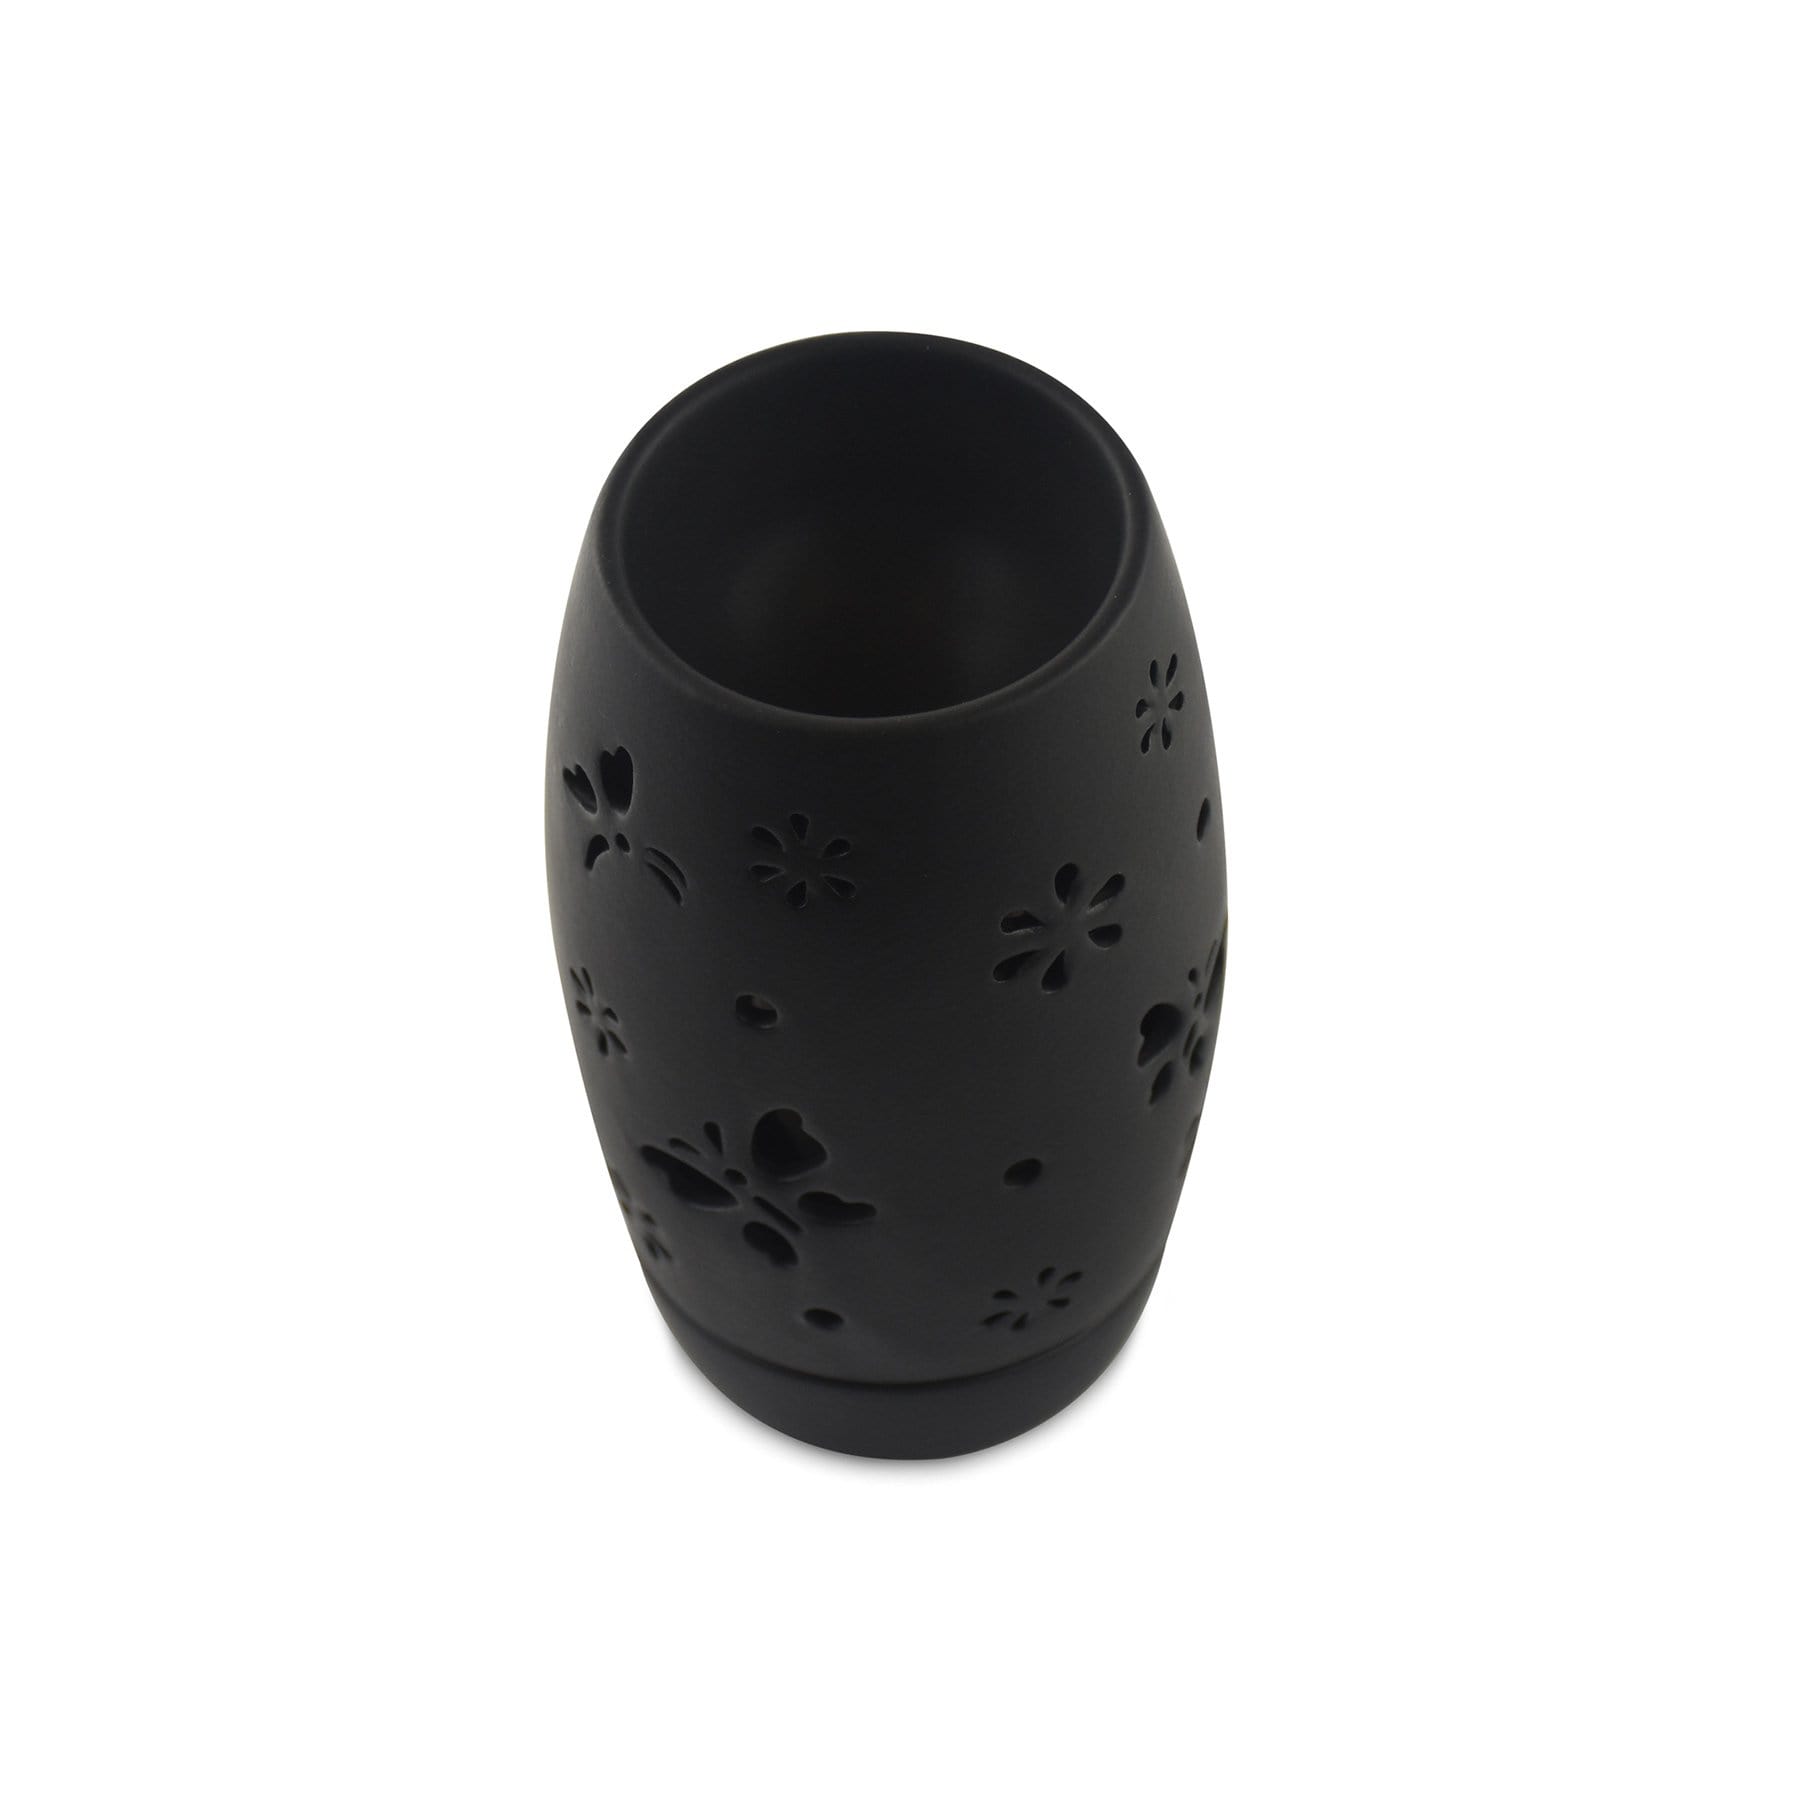 Hysses Burners/Devices Ceramic, Black Matte Electric Burner Butterfly  (Black)